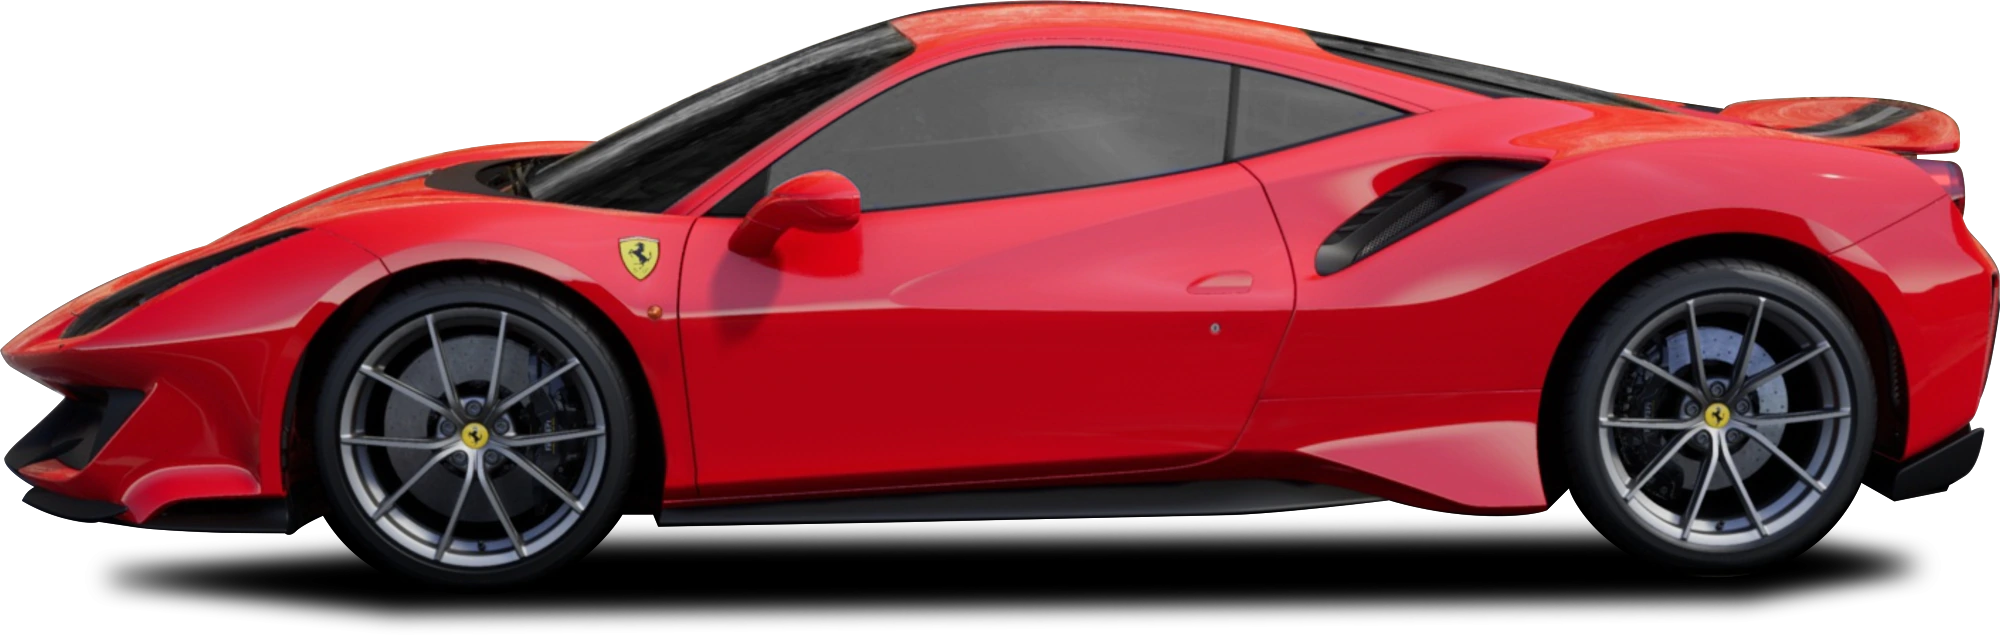 Rood Ferrari GTC4lusso Transparant Beeld